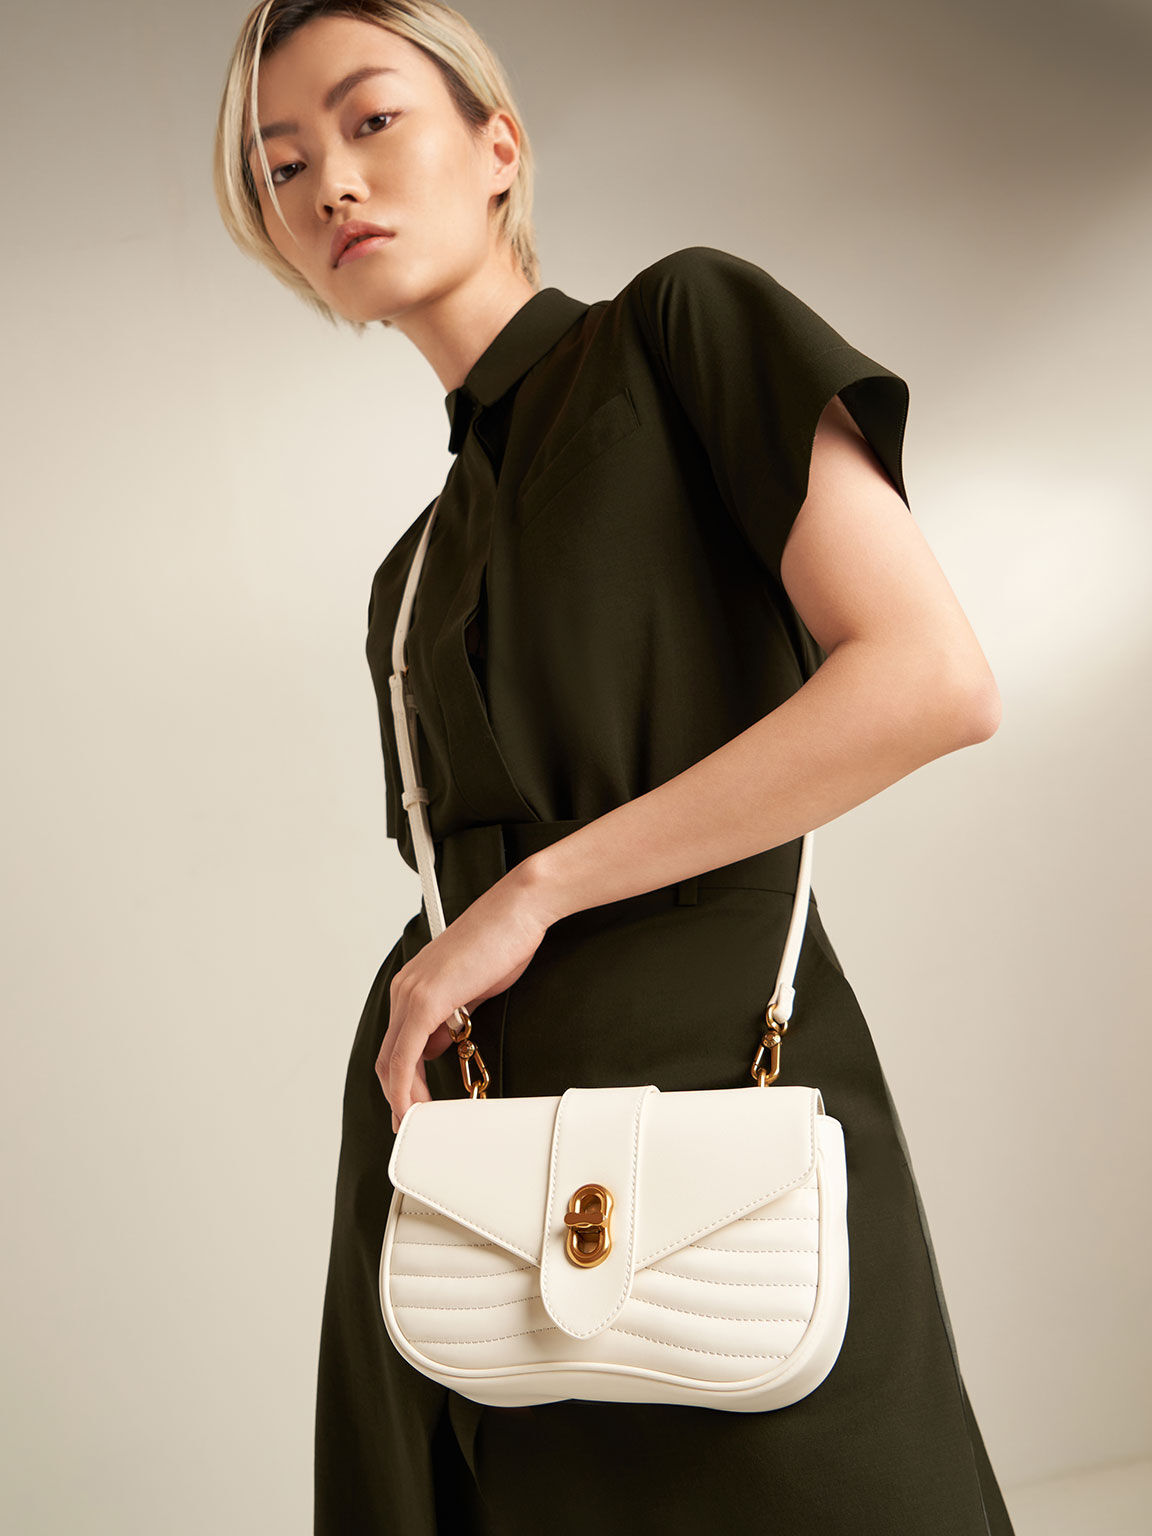 Aubrielle Chain-Handle Panelled Crossbody Bag, Cream, hi-res